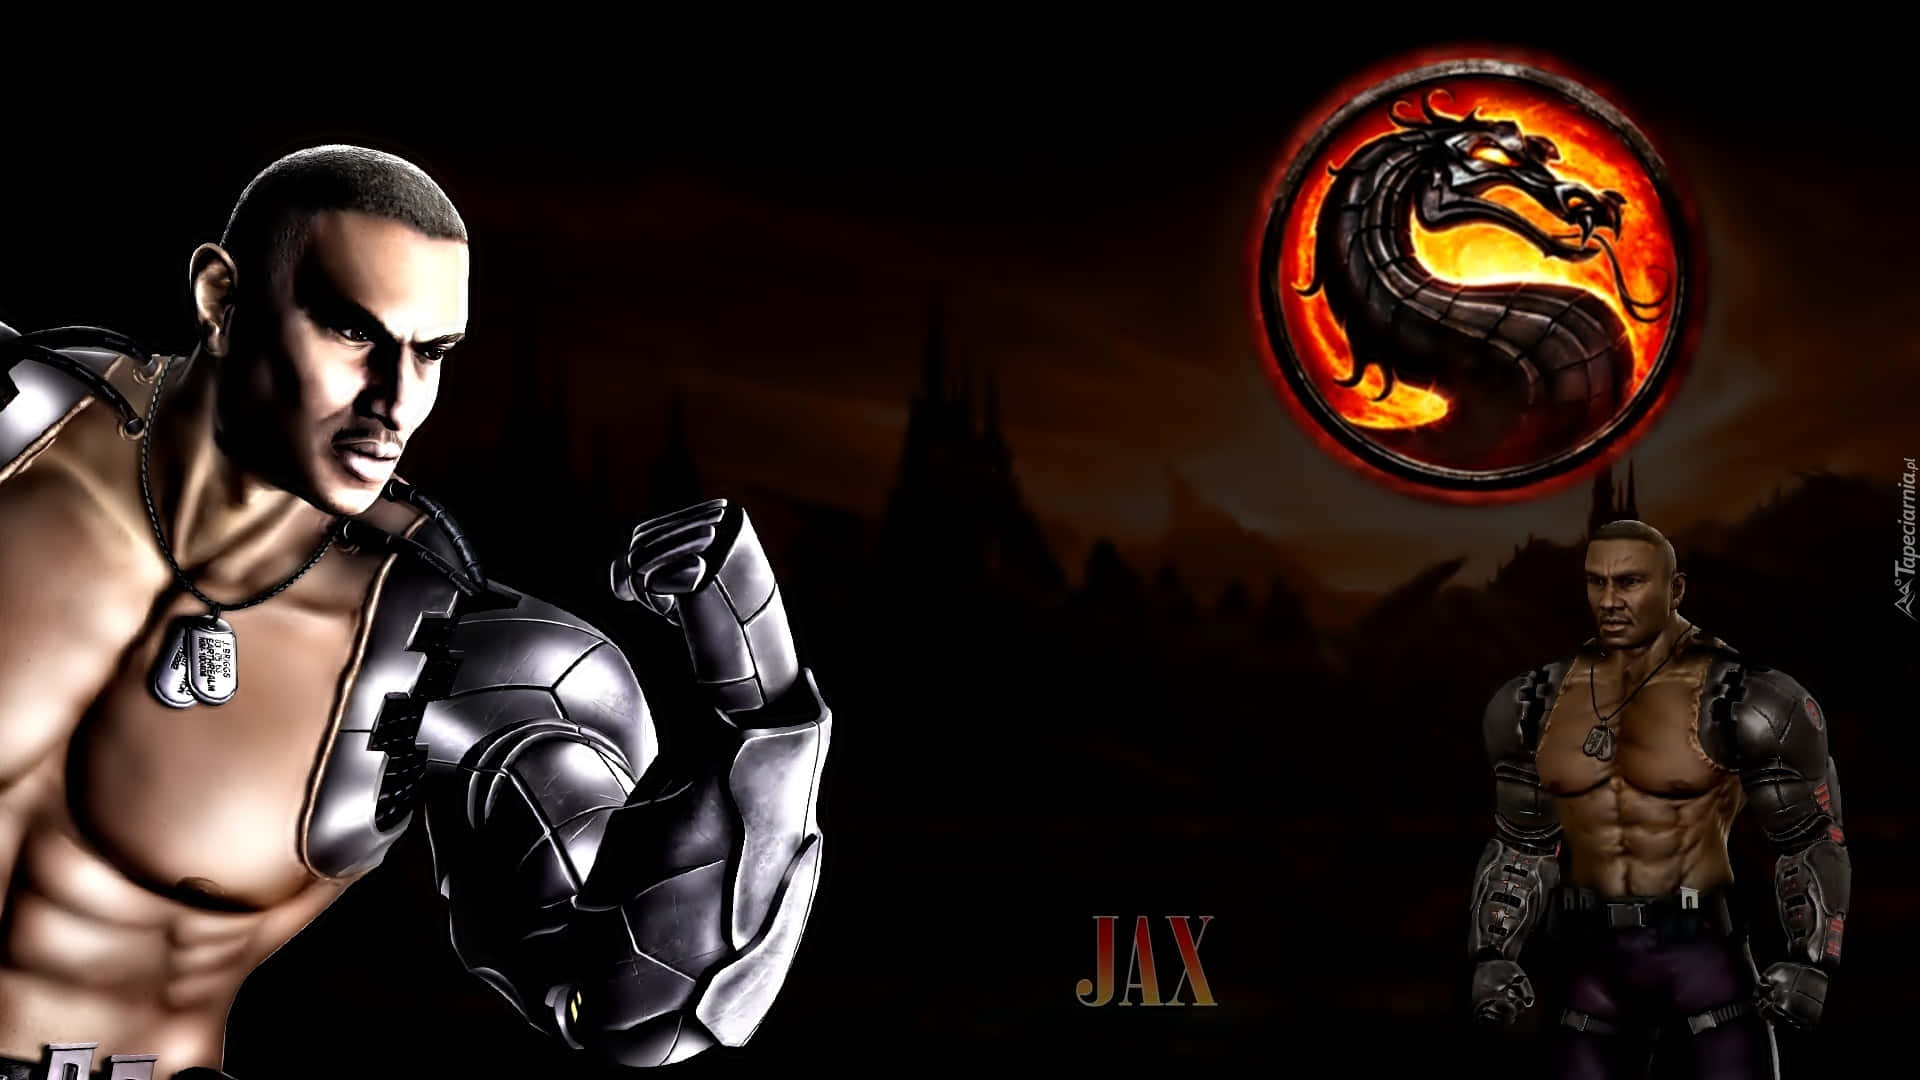 Mortal Kombat's Powerful Warrior, Jax, in Action! Wallpaper